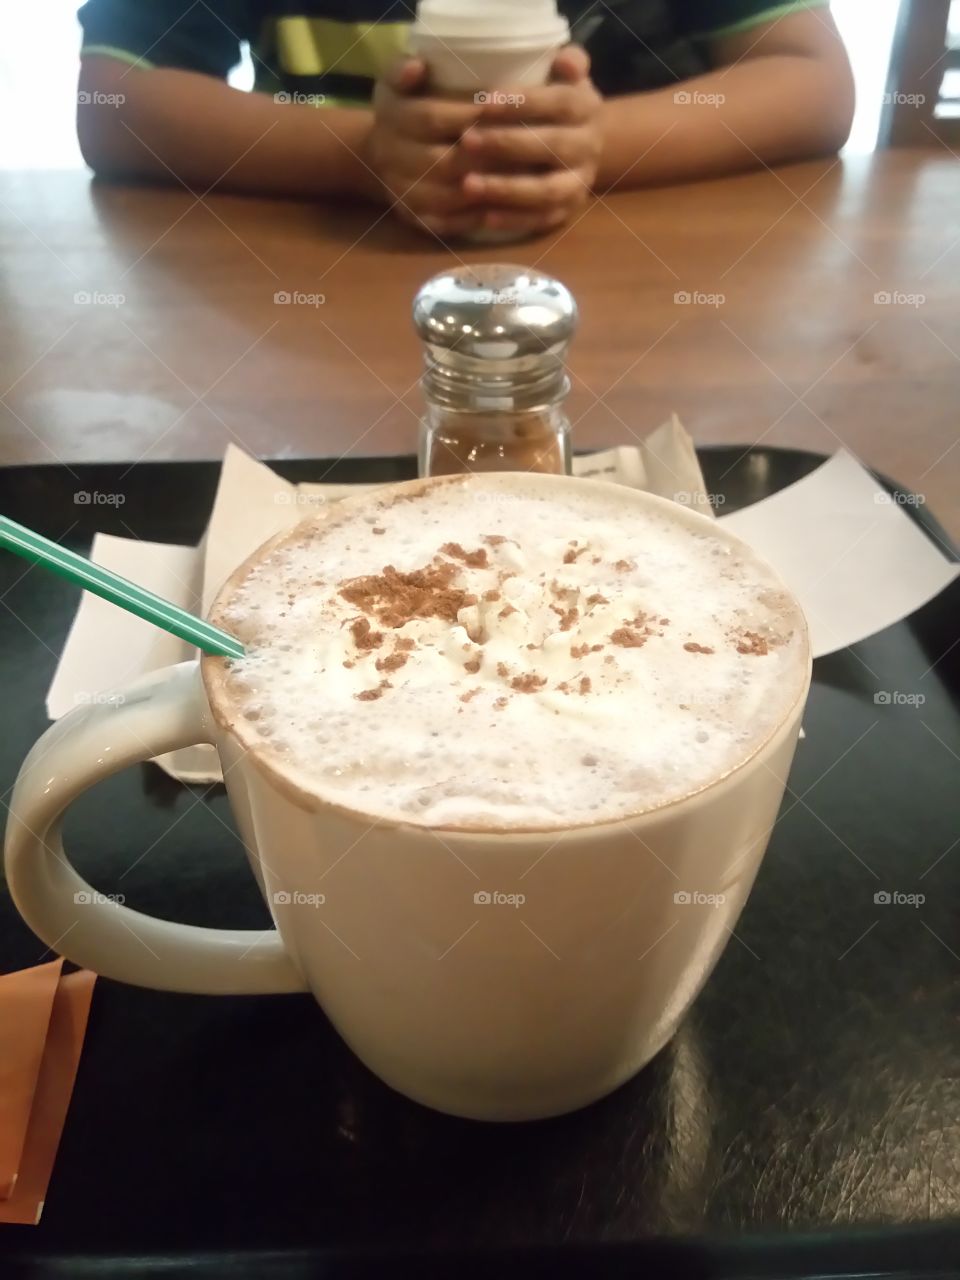 mocha latte with dash of cinnamon. yum